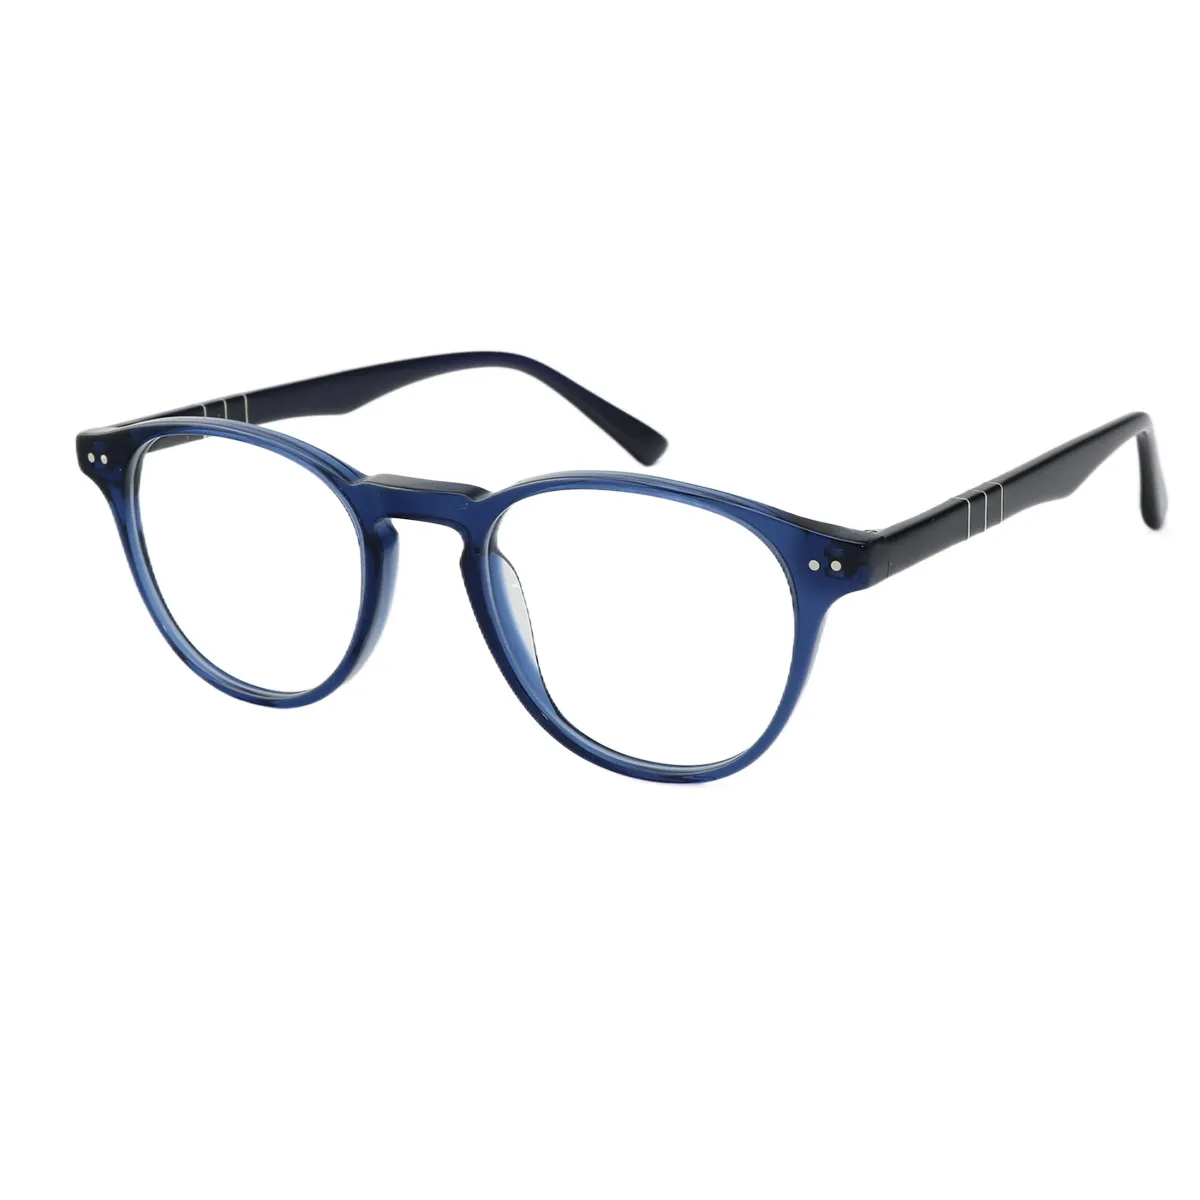 Ernest - Round Blue Glasses for Men & Women - EFE